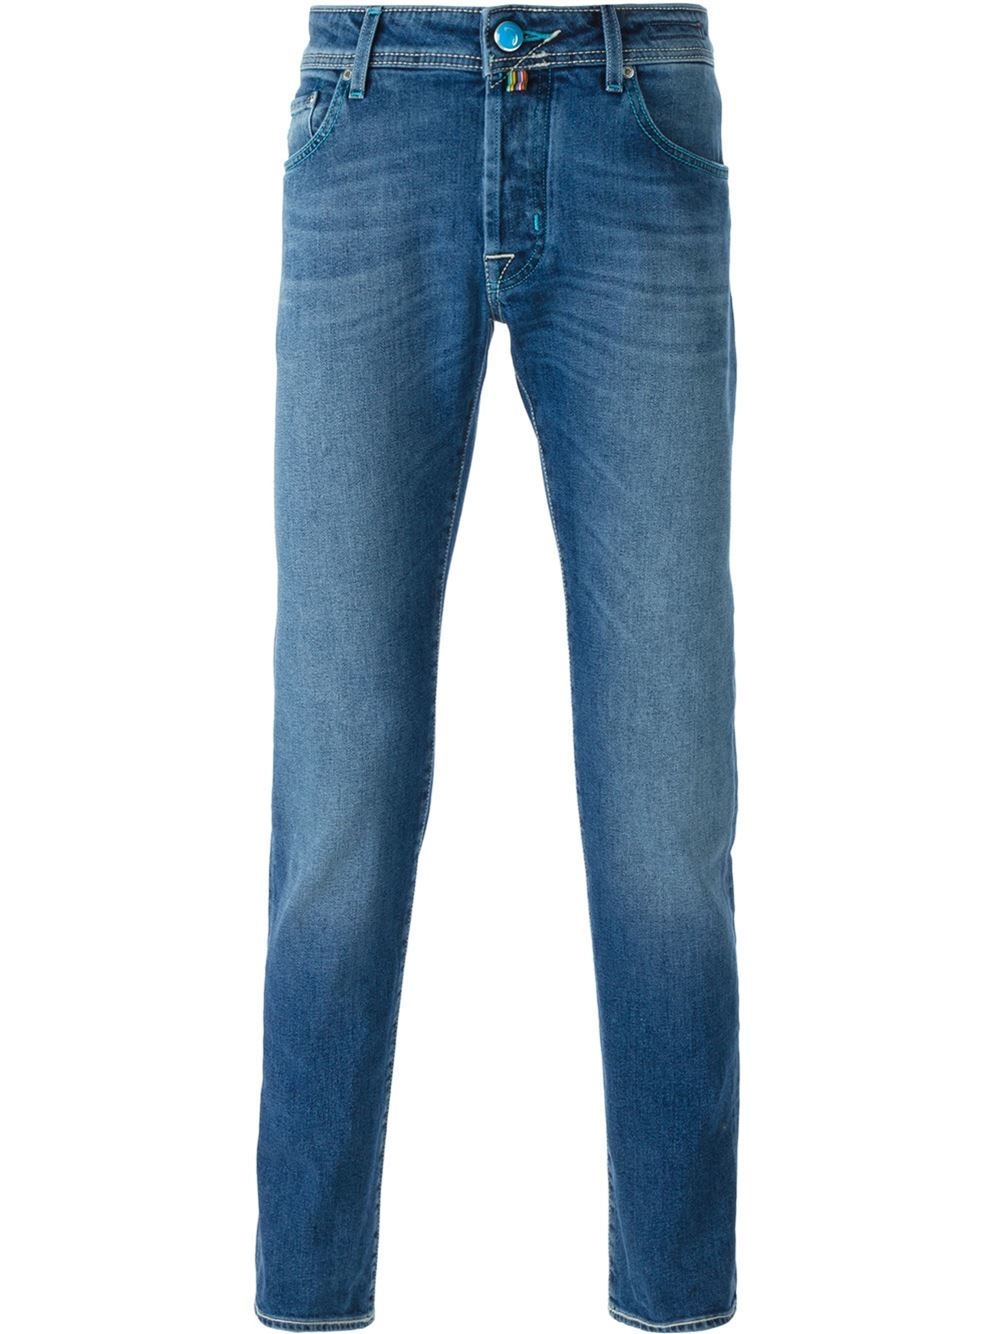 Jacob cohen Pocket Square Detail Jeans in Blue for Men | Lyst